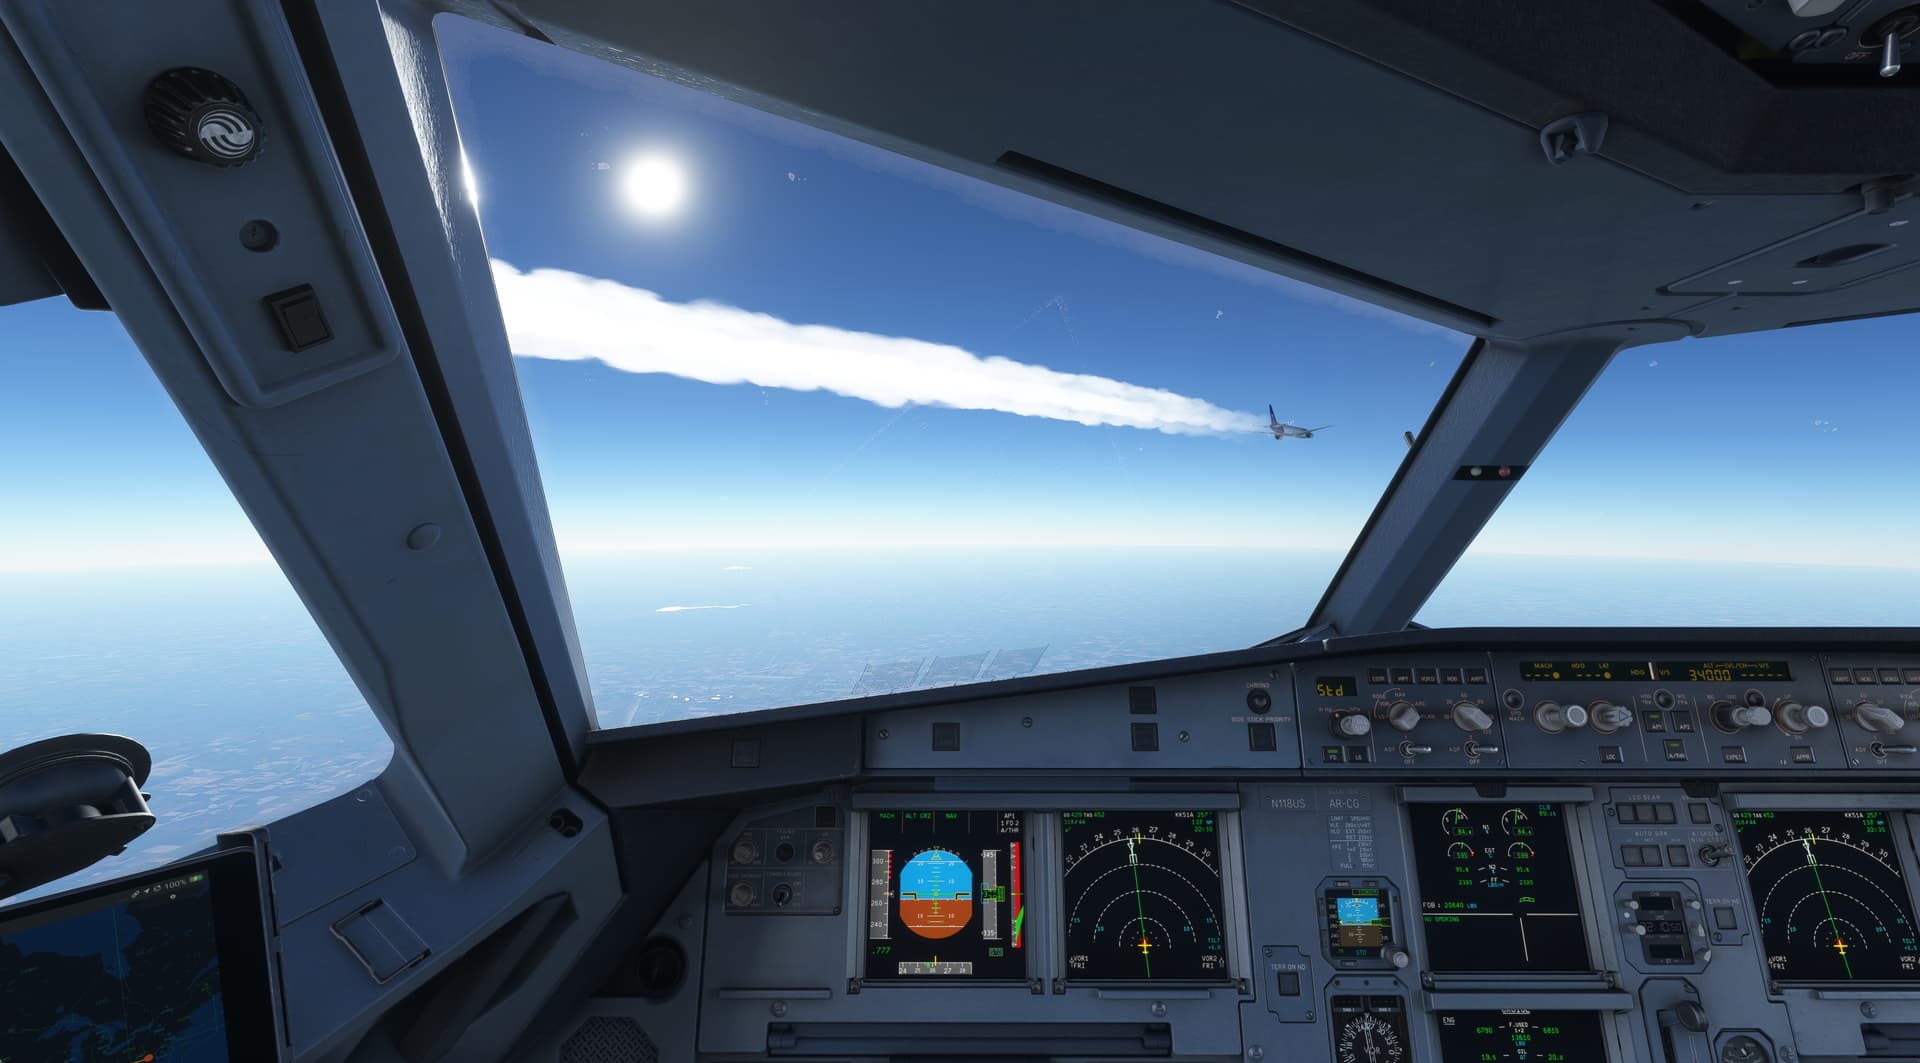 android microsoft flight simulator image